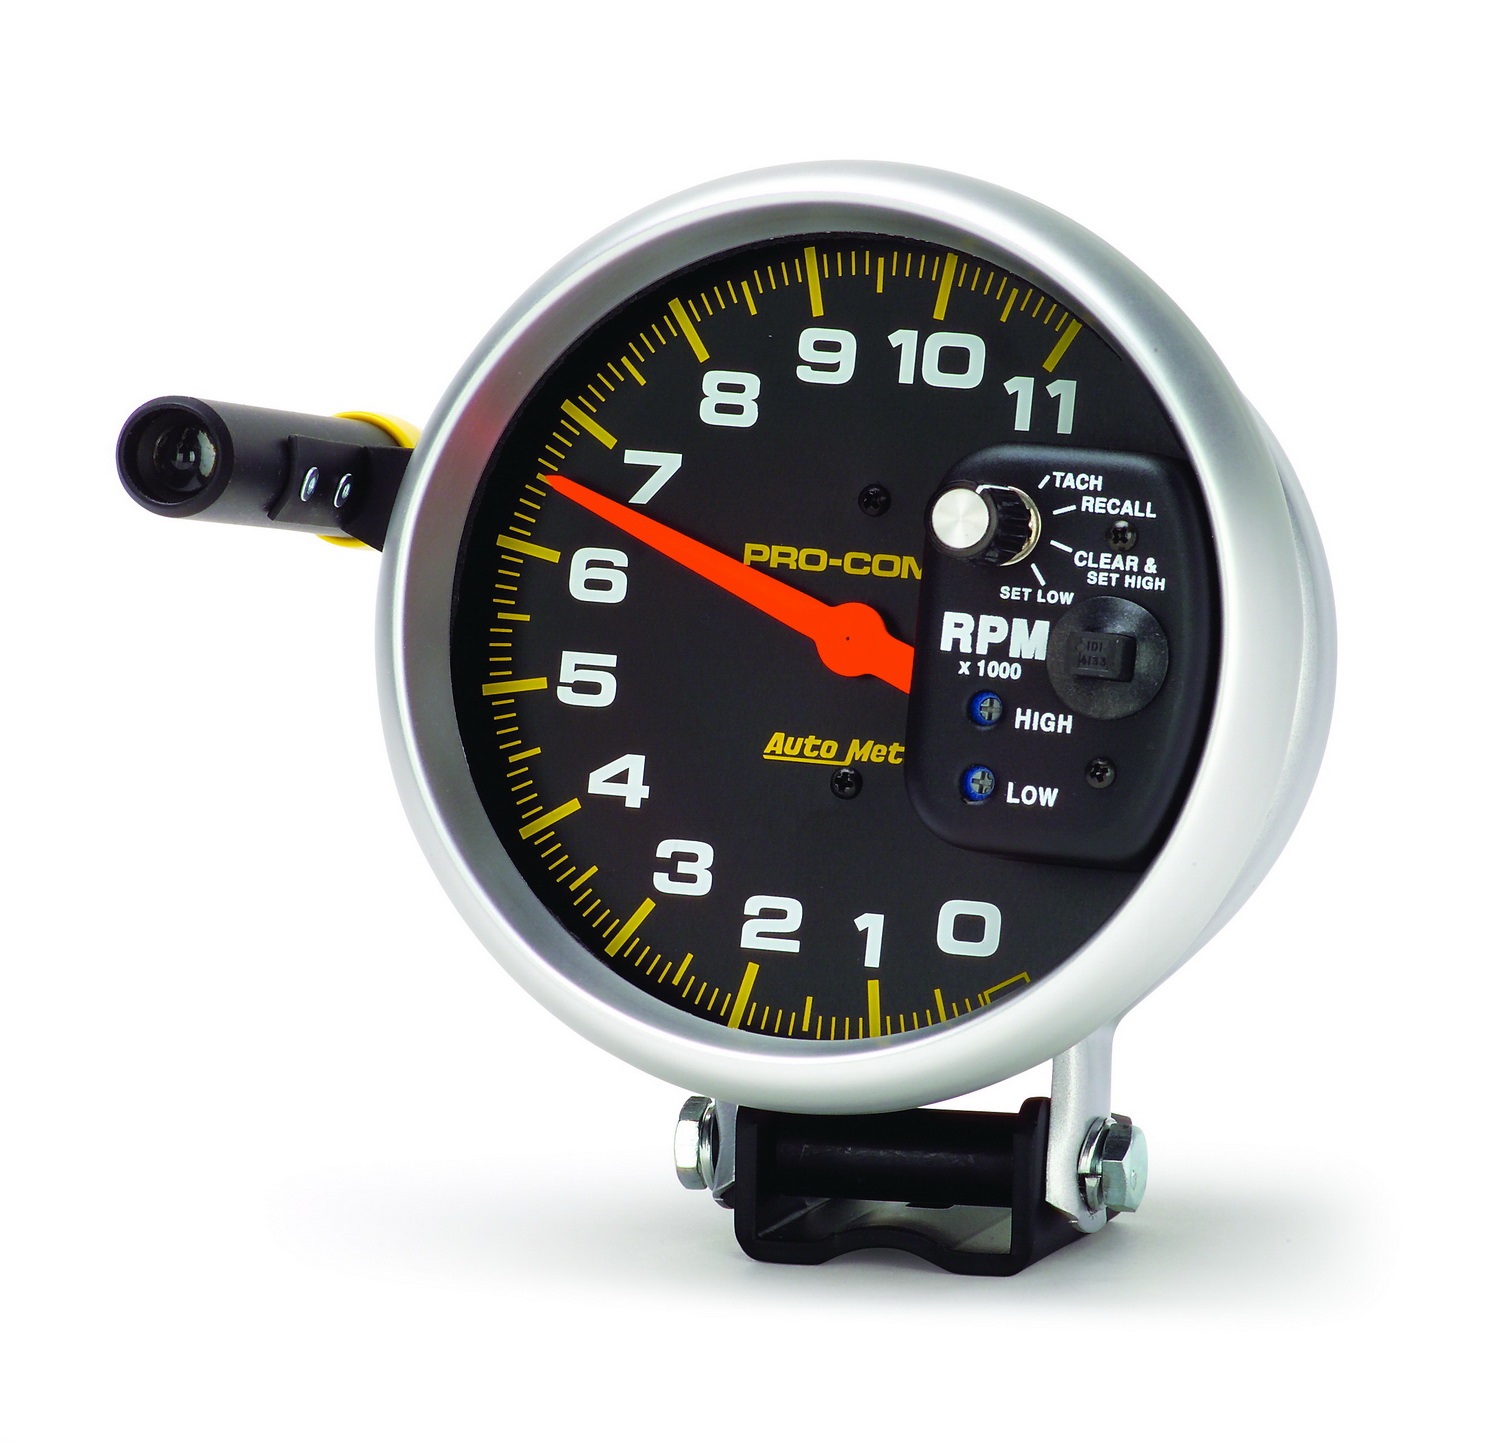 Auto Meter Auto Meter 6857 Pro-Comp; Single Range Tachometer